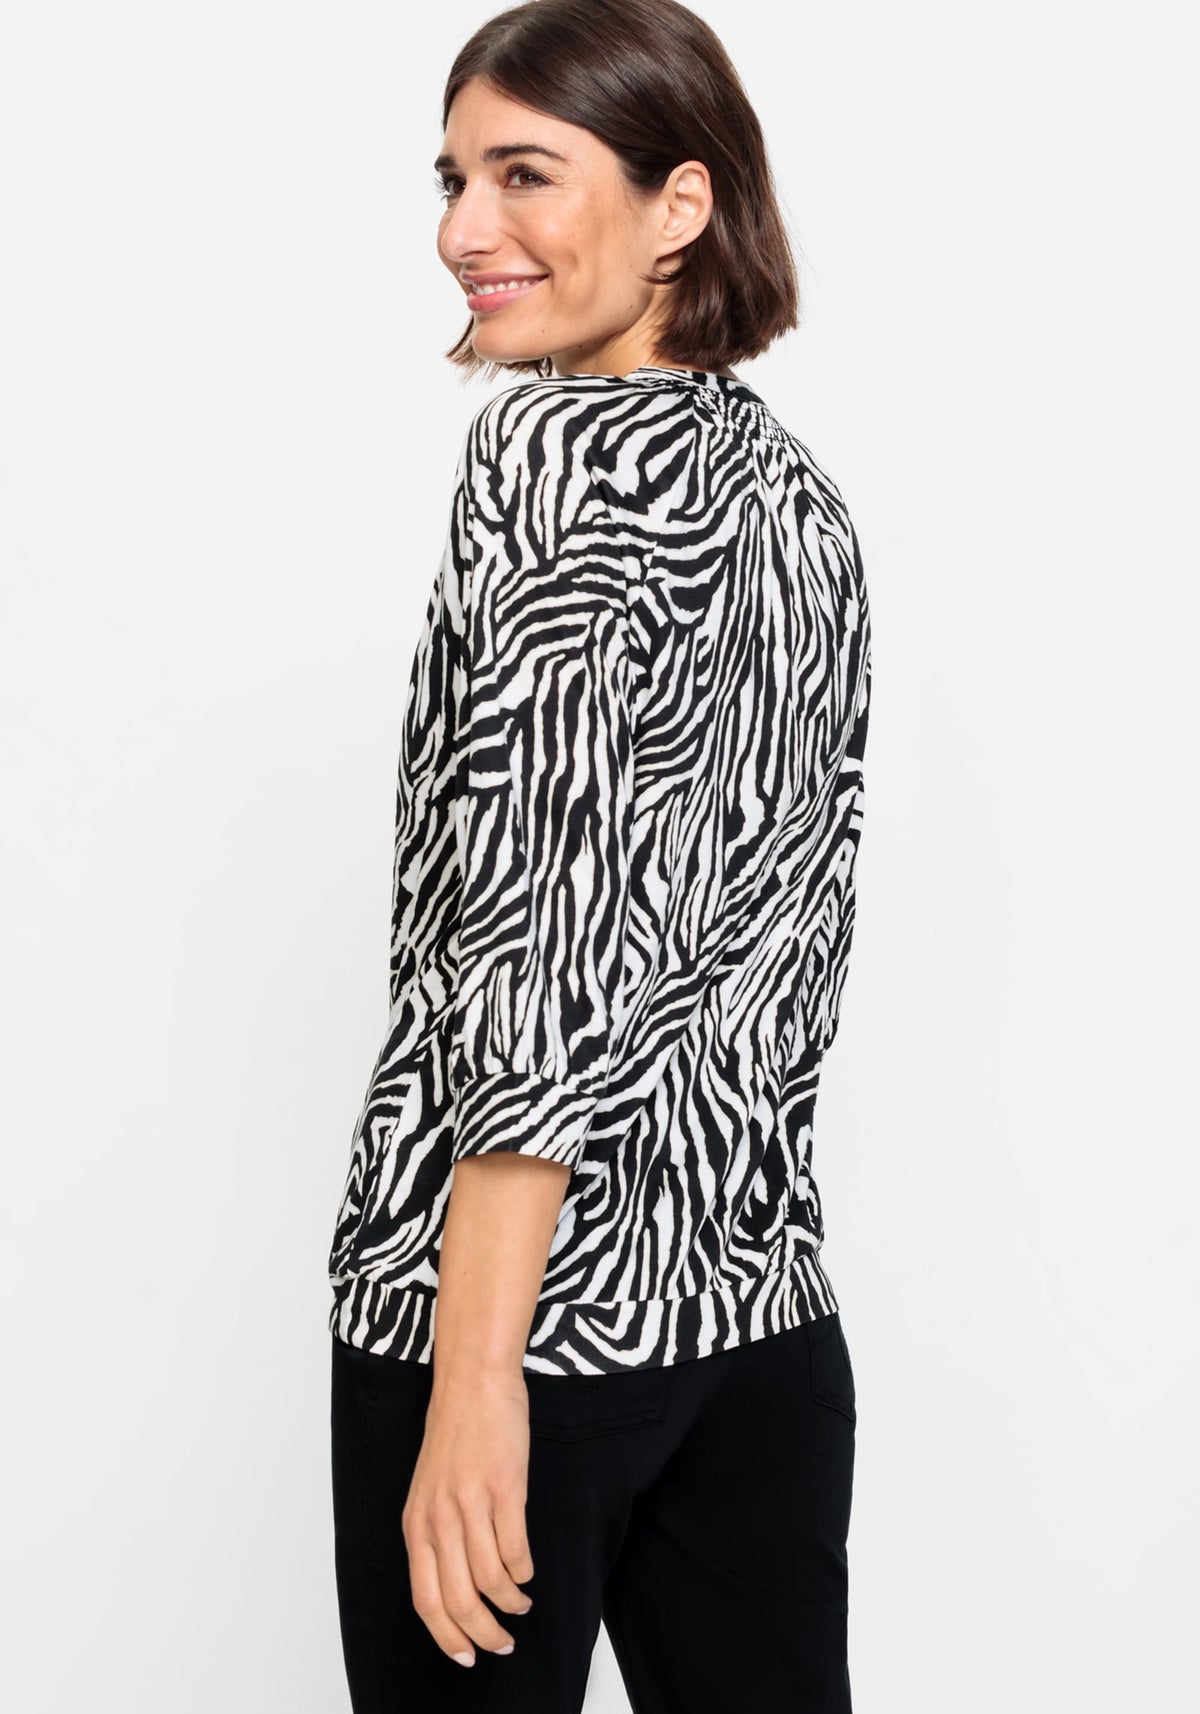 Cotton Blend 3/4 Sleeve Zebra Print Tie-Neck T-Shirt containing TENCEL™ Modal